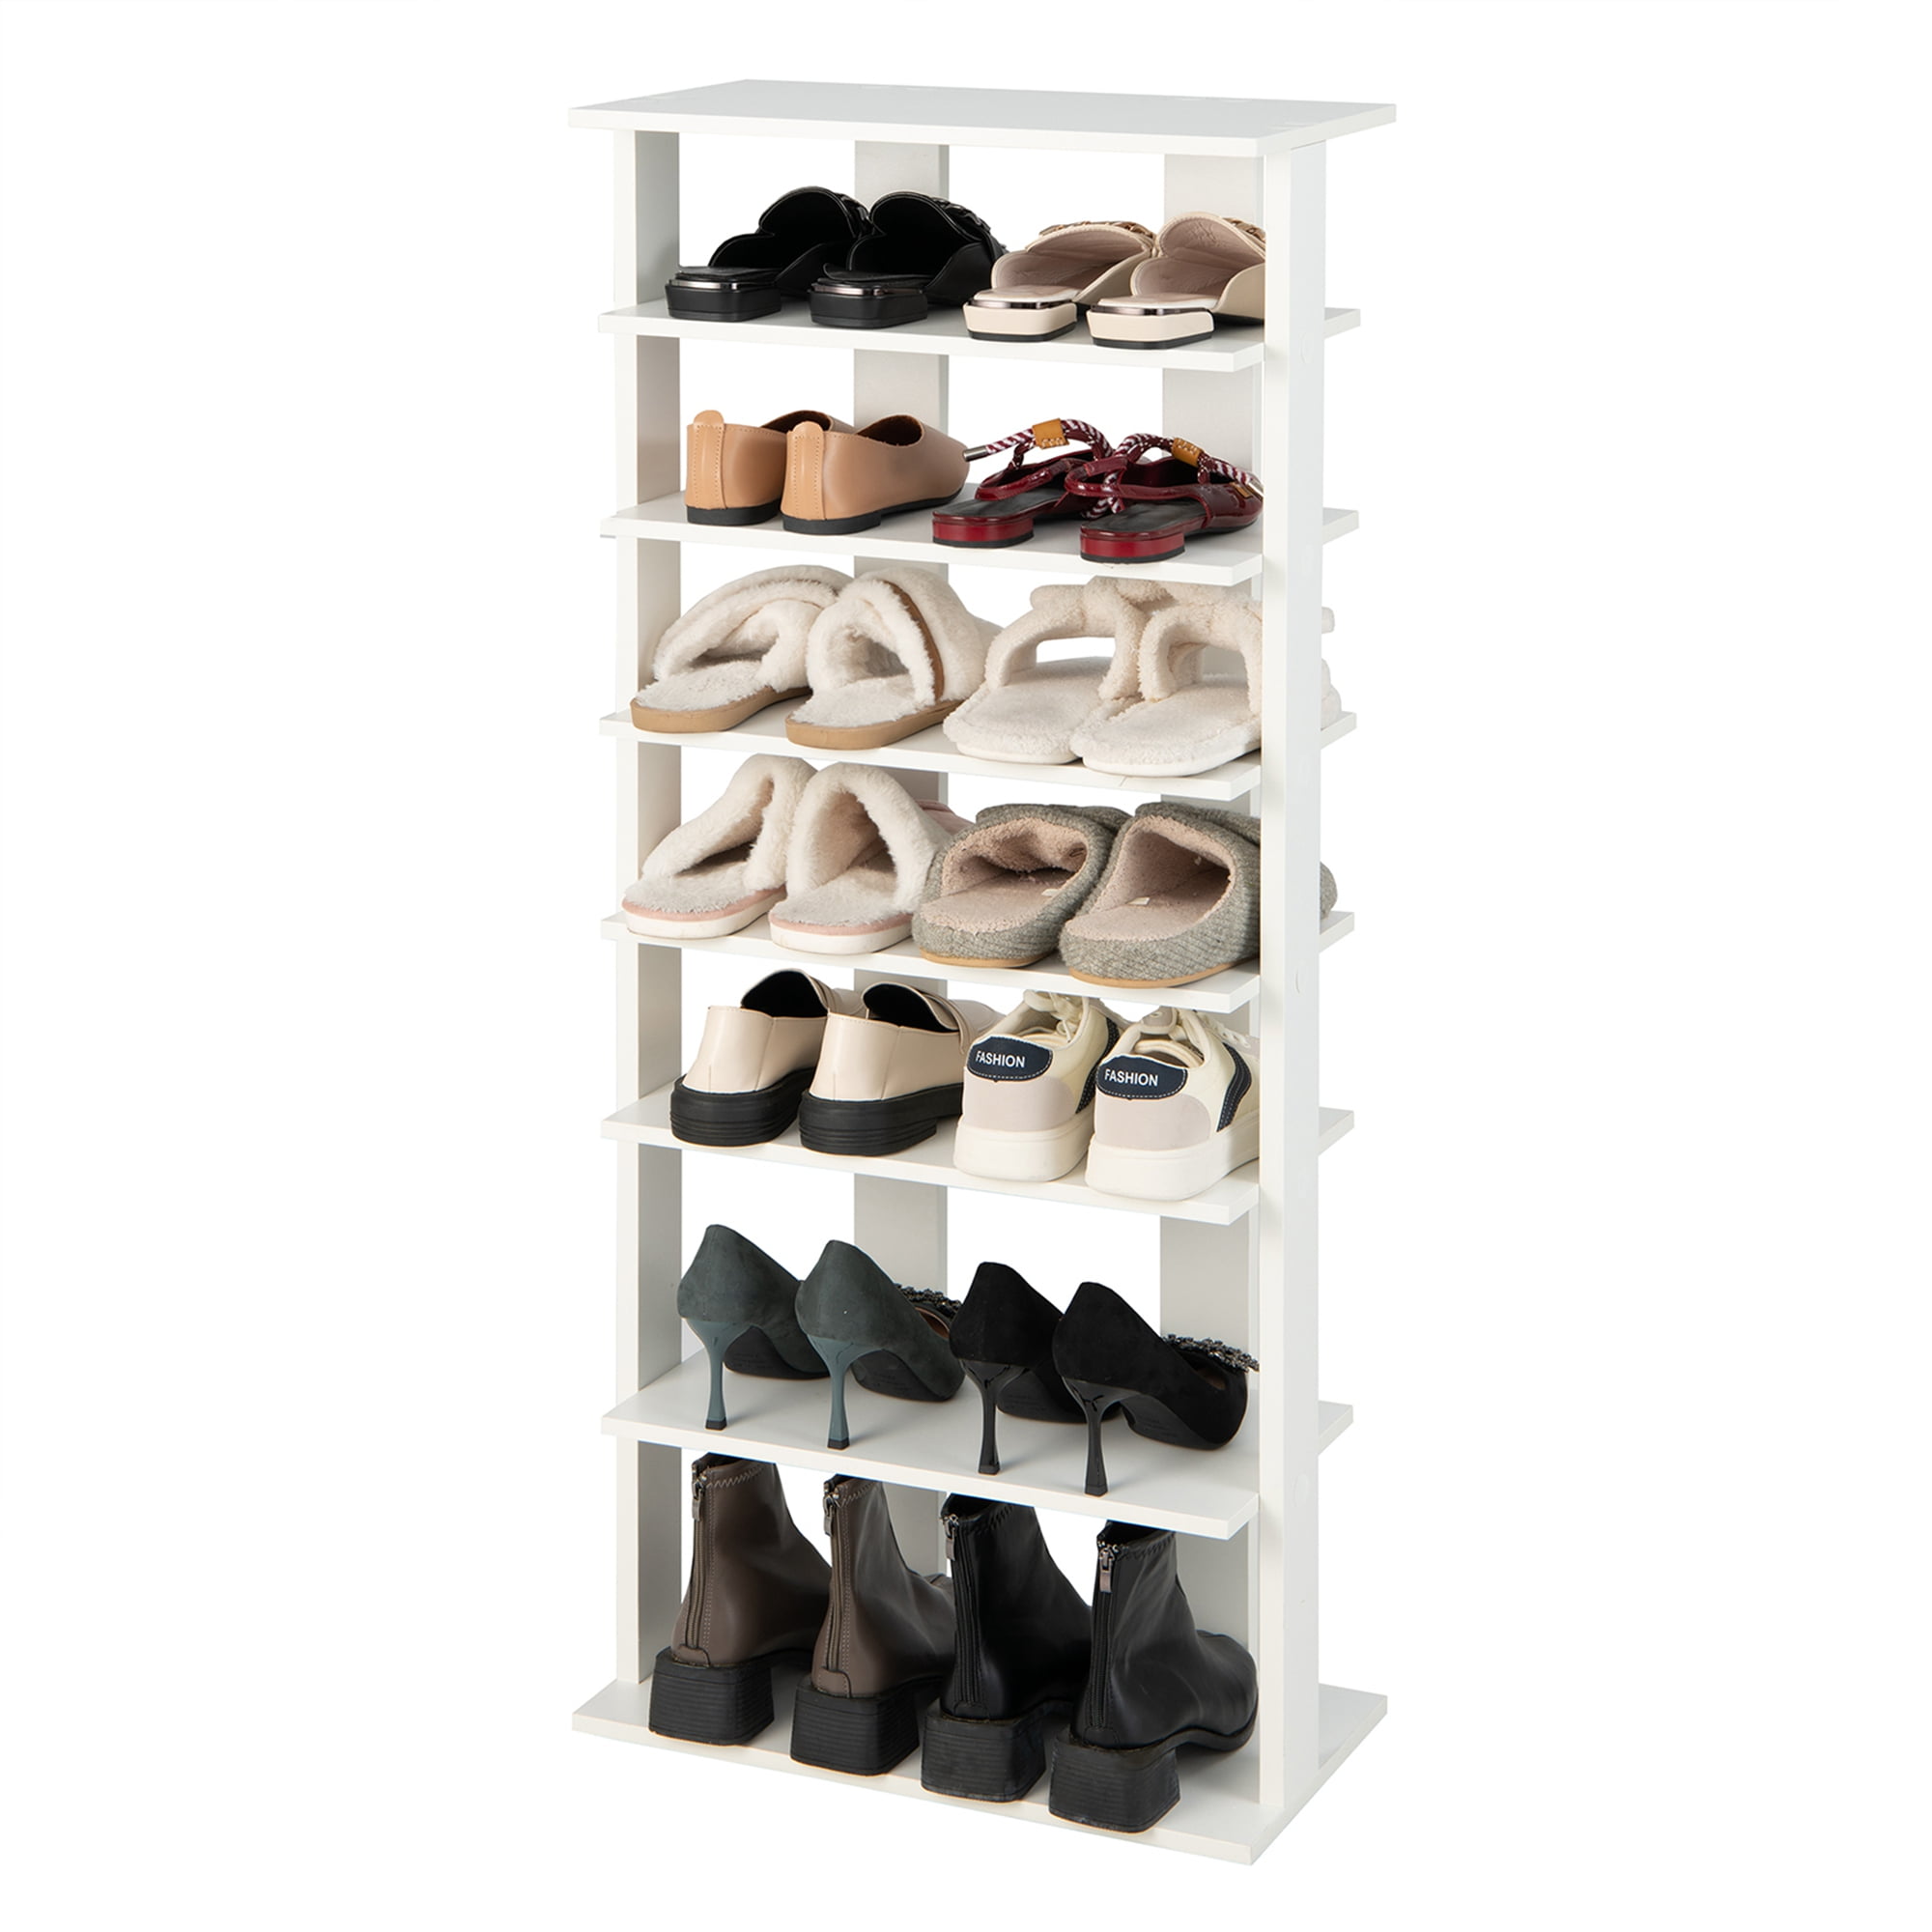 JIUYOTREE Double Row Shoe Rack Storage Organizer with Big Capacity,7-Tier  Shoe